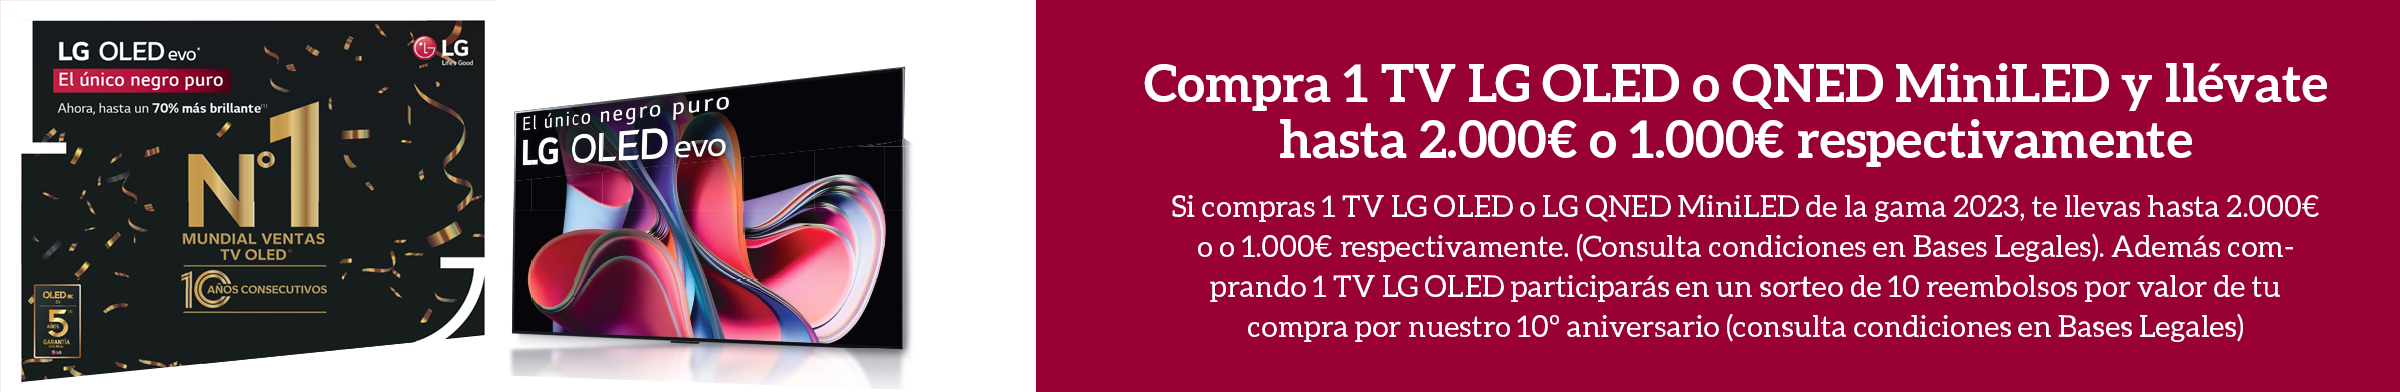 Compra 1 TV LG OLED o QNED MiniLED y llévate hasta 2.000€ o 1.000€ respectivamente